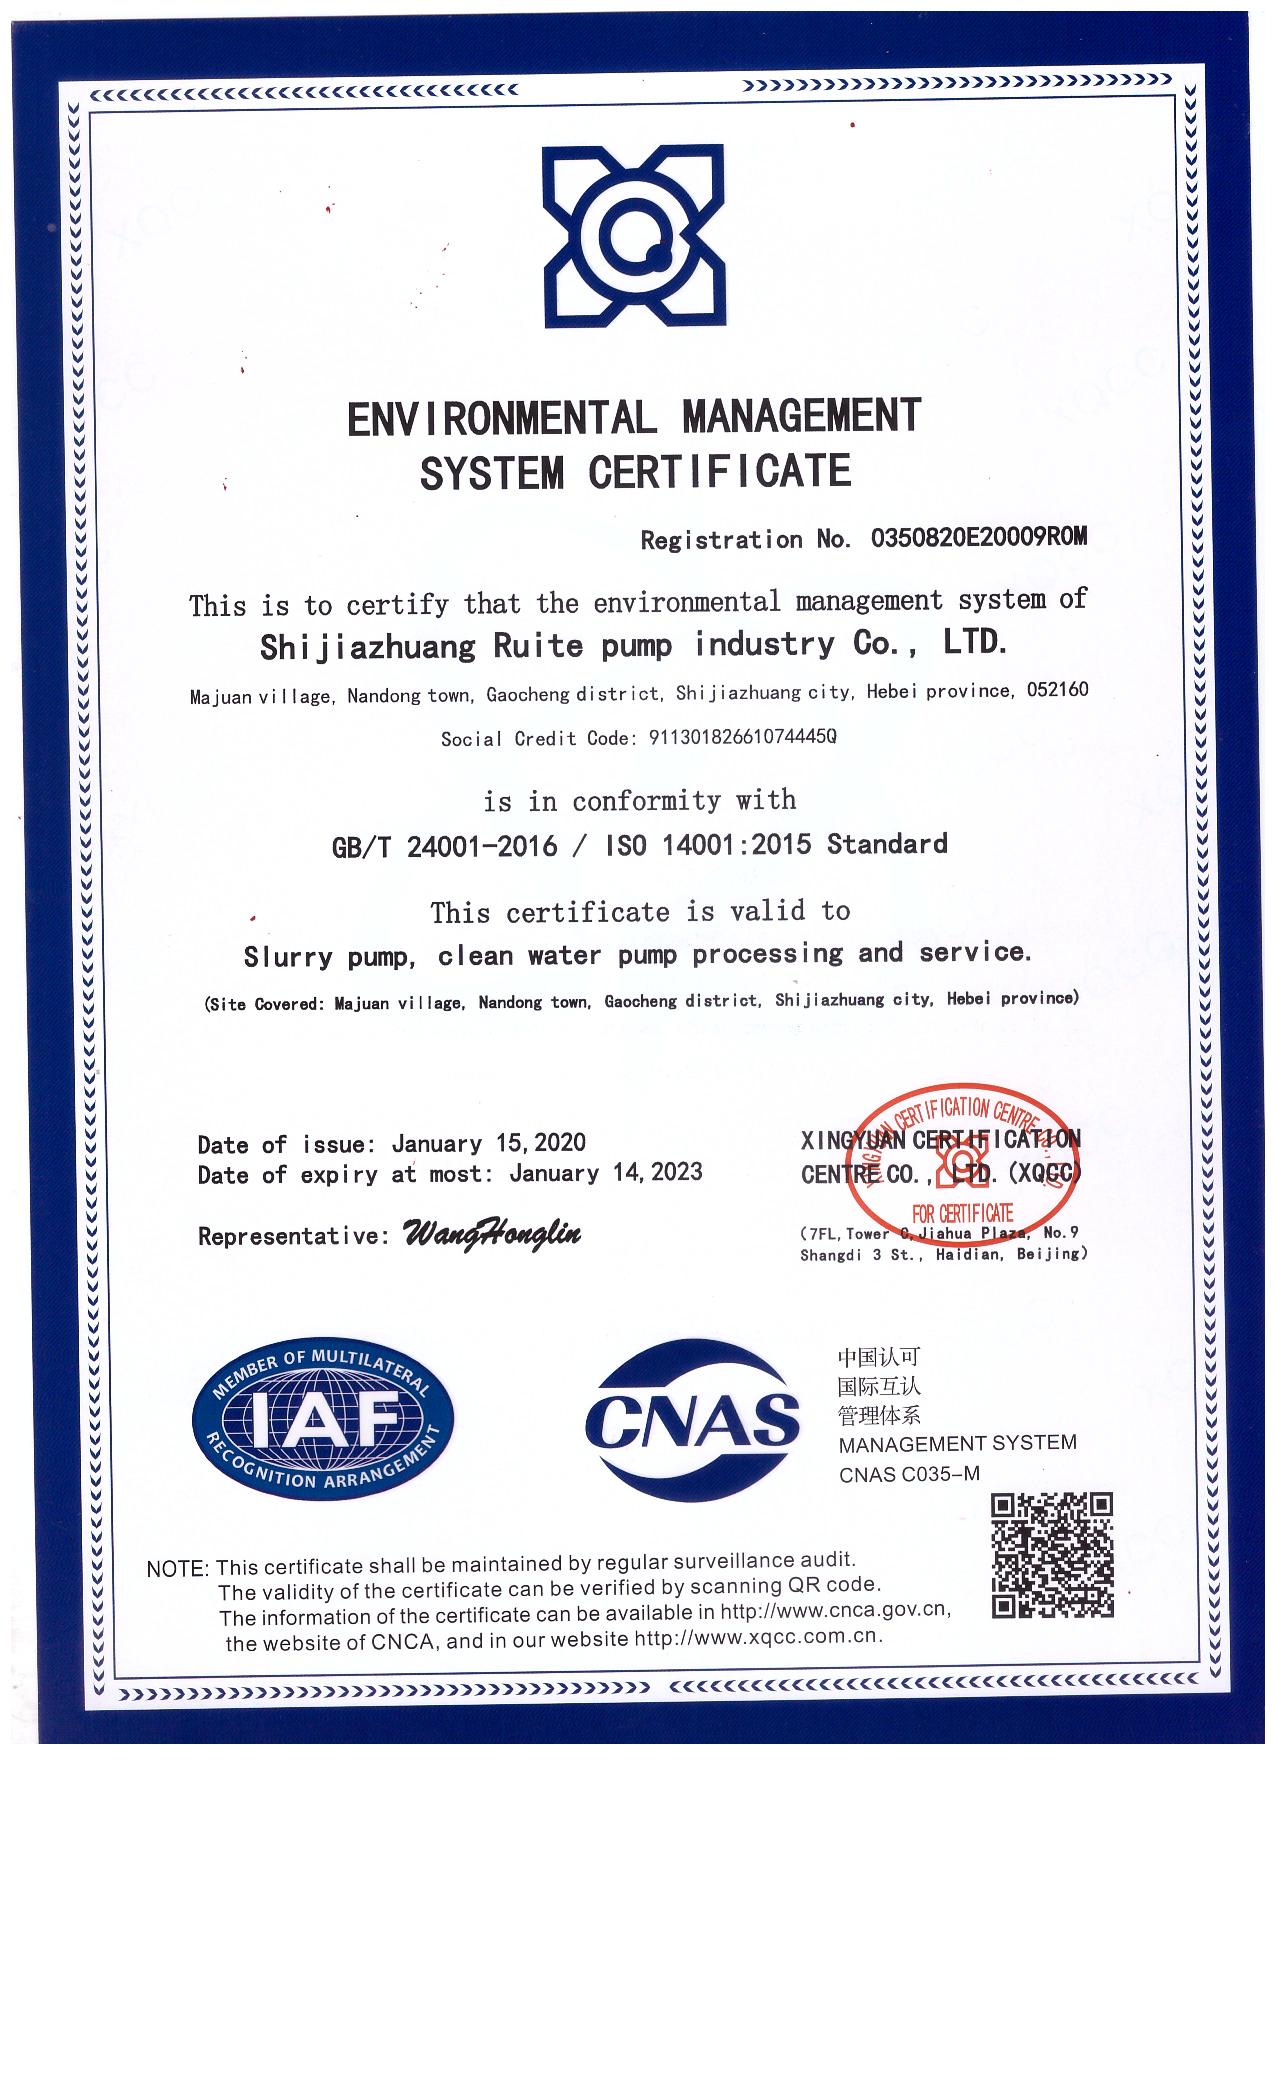 Miljeusysteem sertifikaat